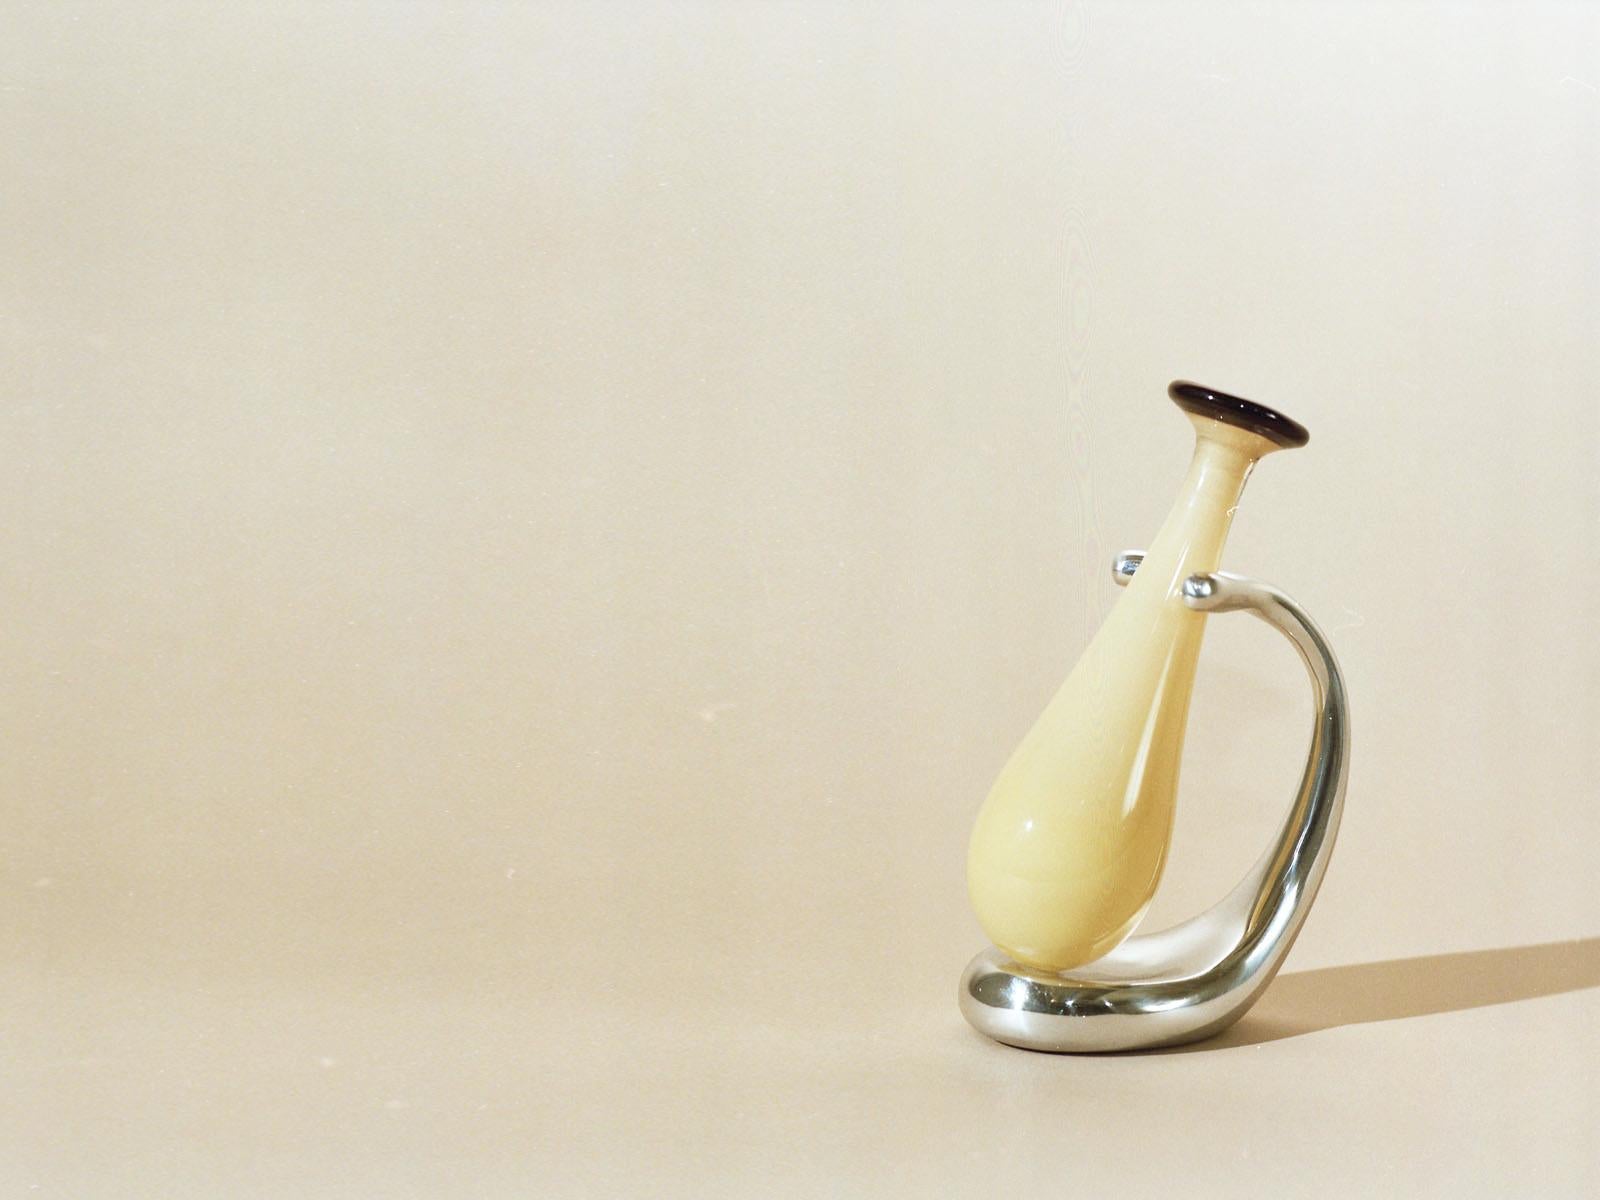 Hand-Carved Truly Lazy Vase, Bud Vase, Tall, Aluminum, Blown Glass, Jordan Mozer, USA, 1999